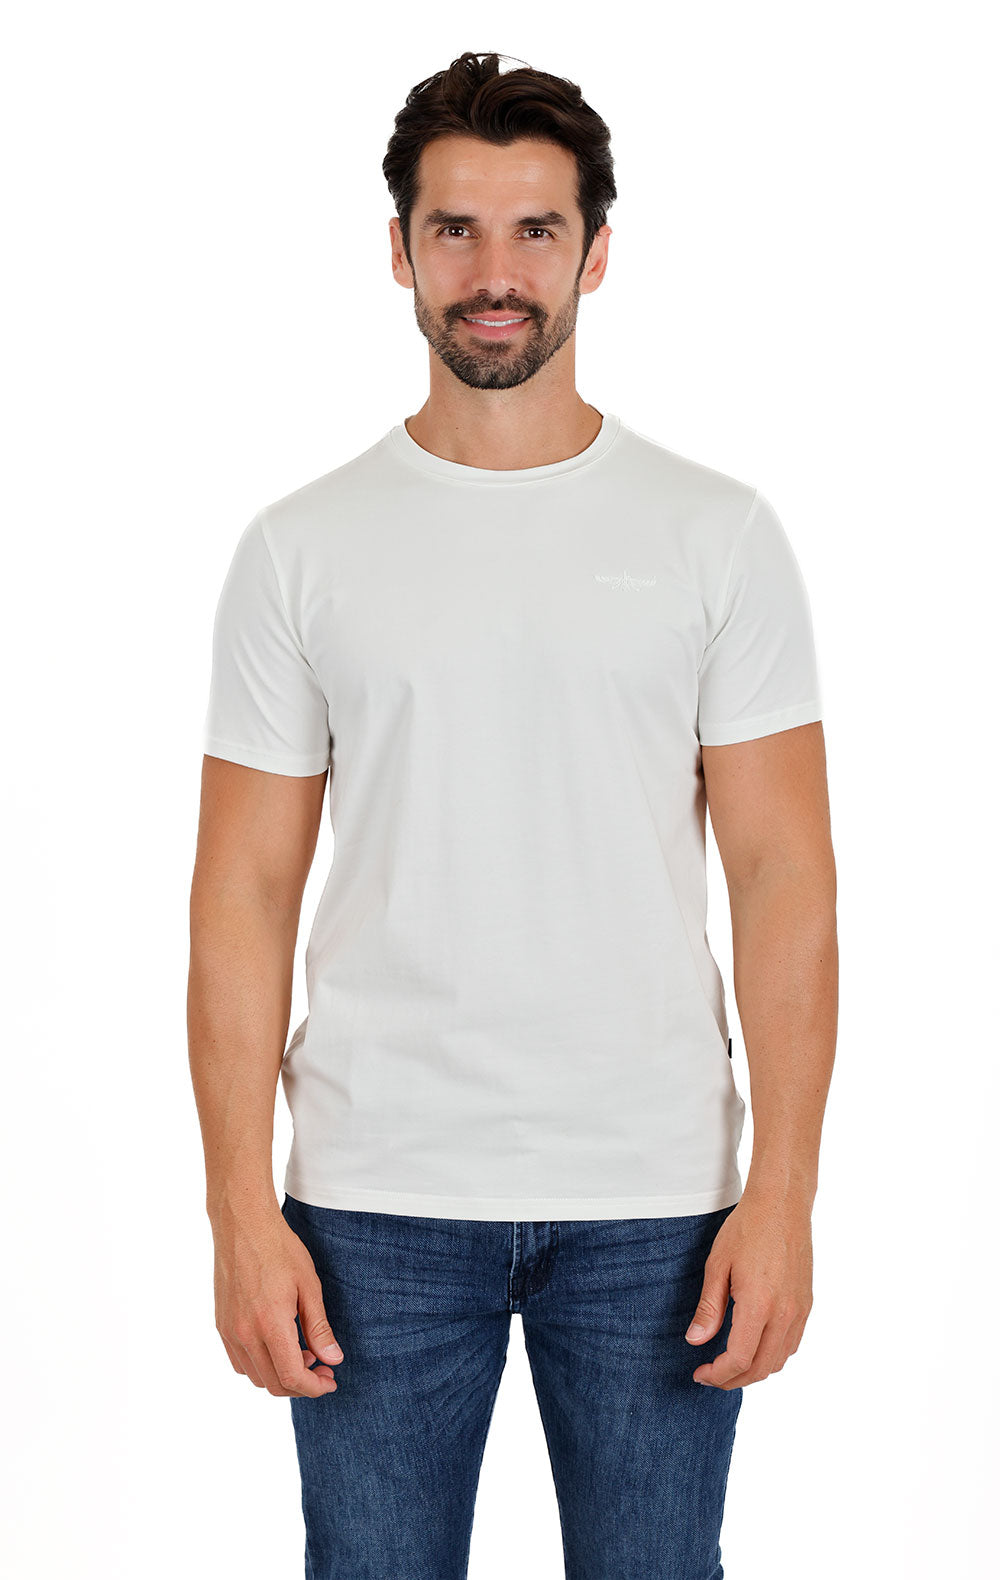 BARABAS Men's Basic Solid Color Crew-neck T-shirts ST933 White